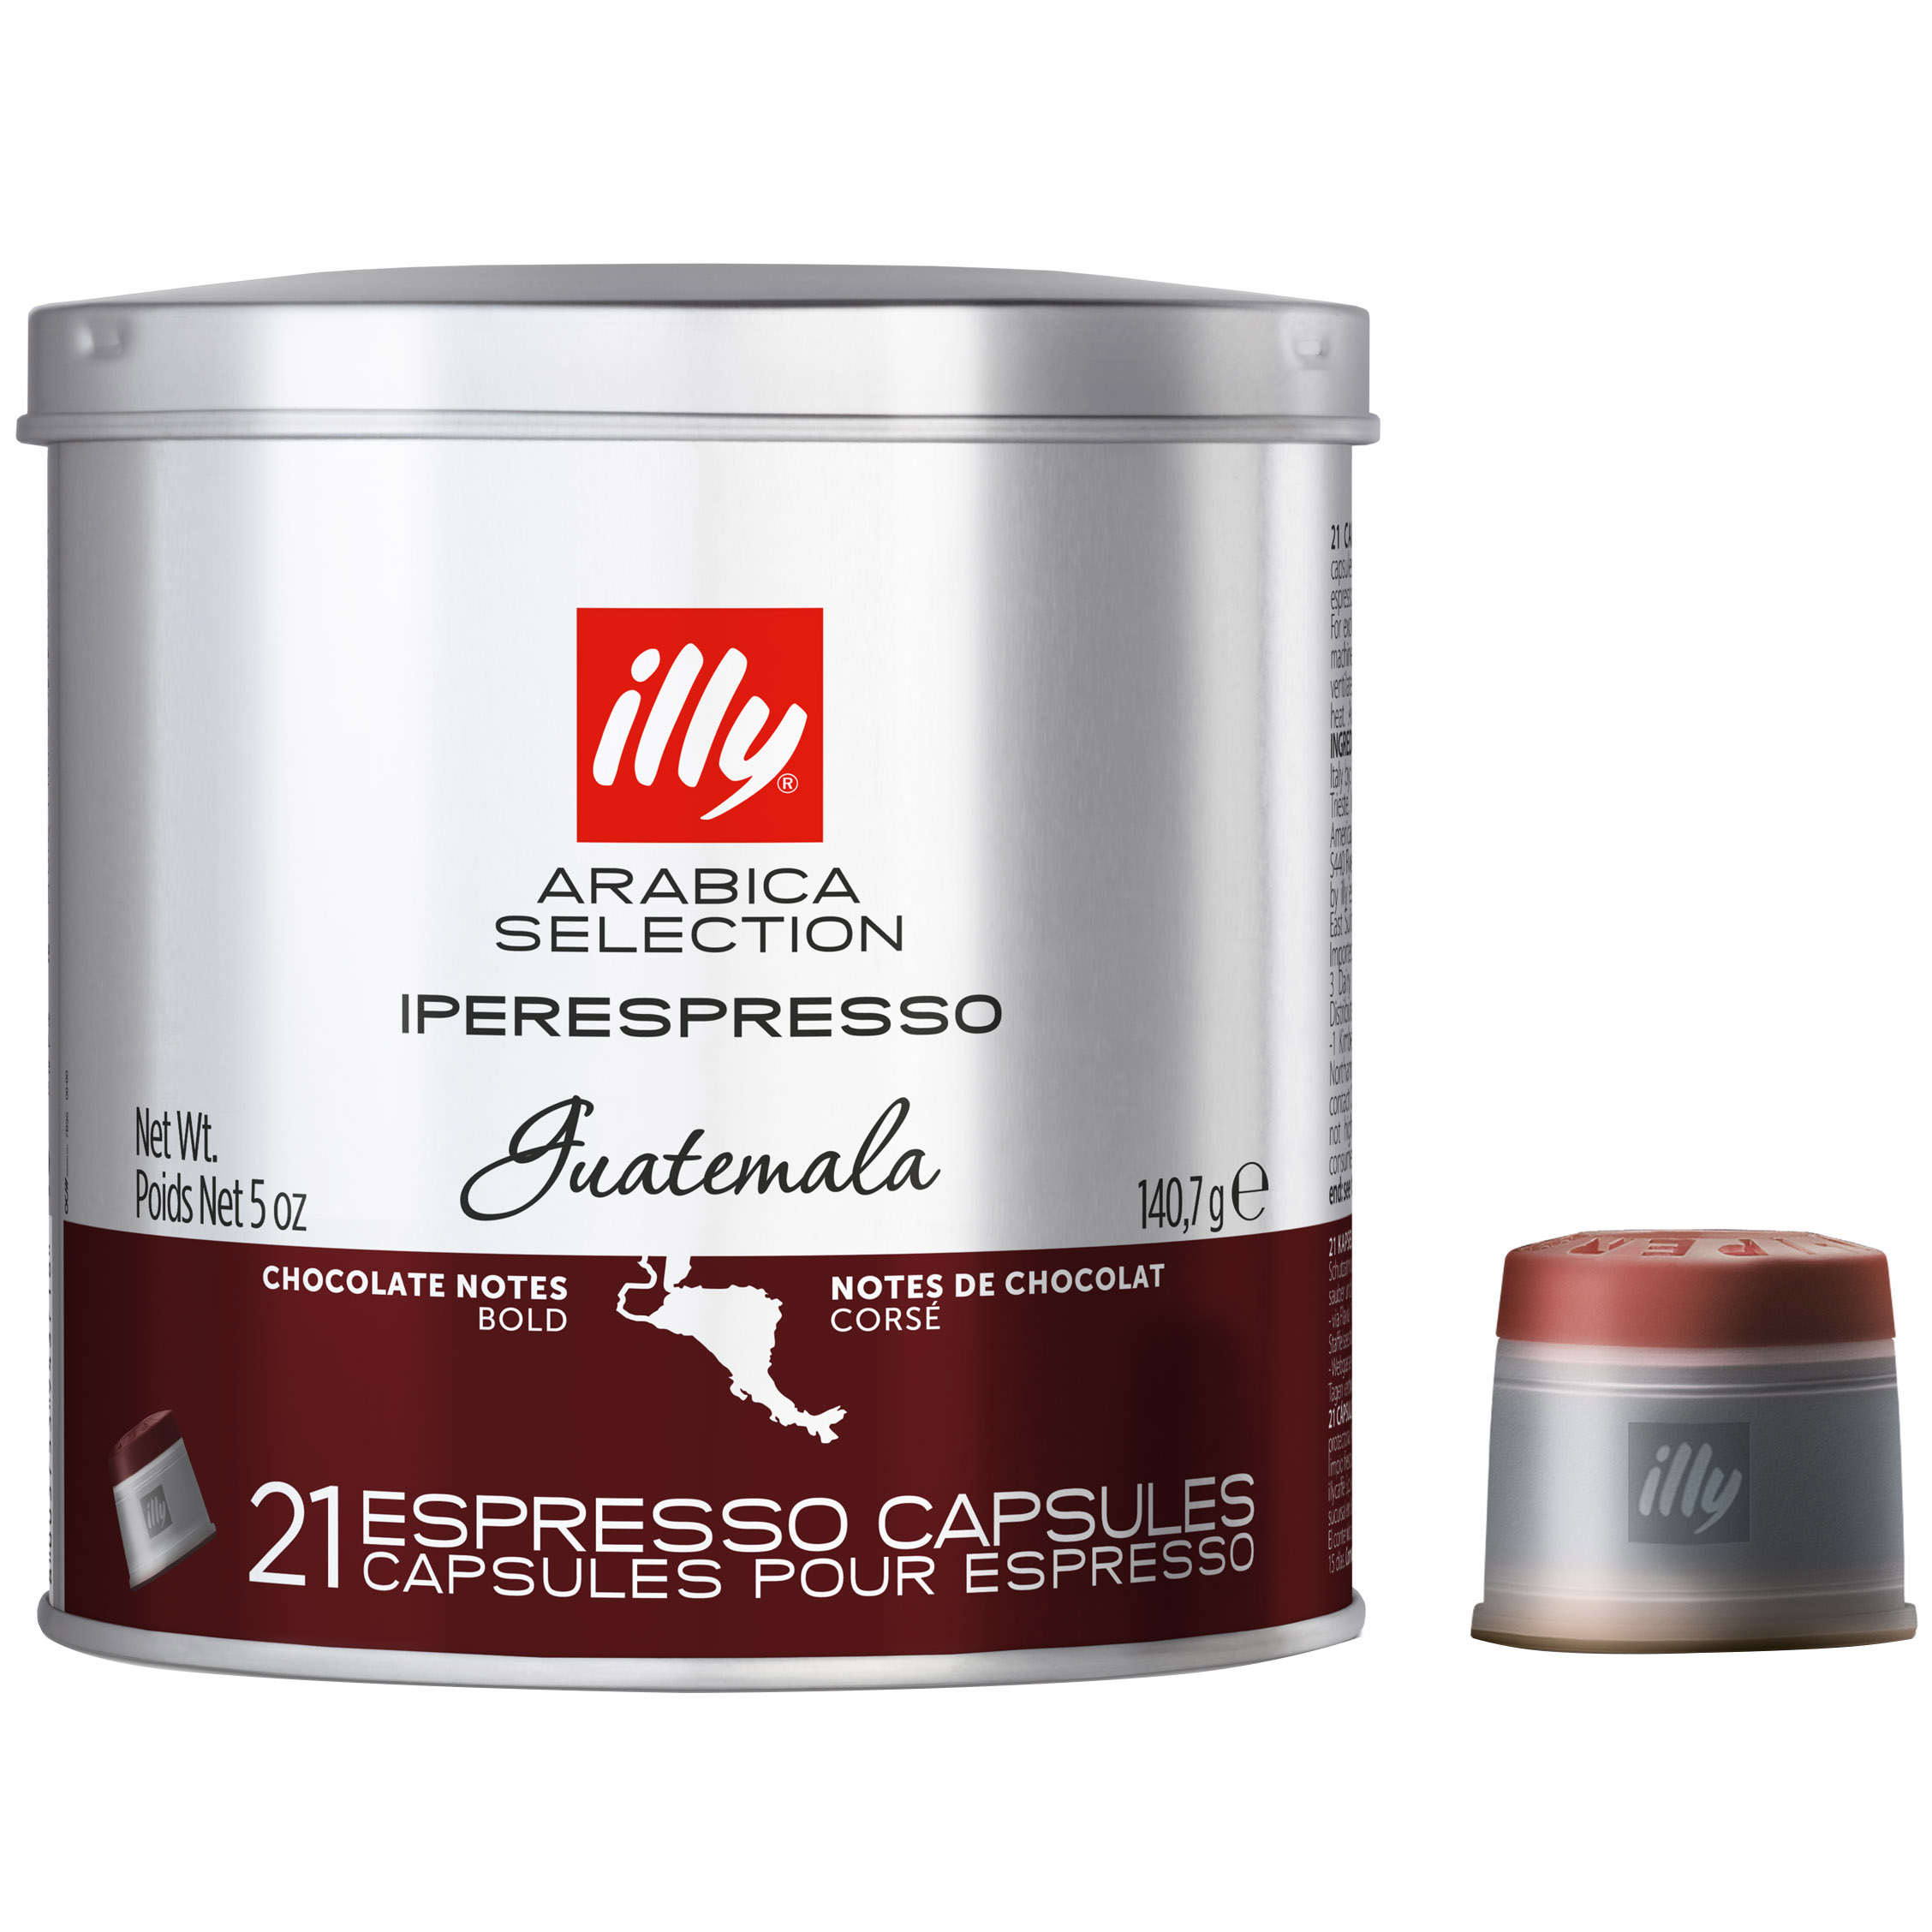 Кофе молотый Illy IperEspresso Monoarabica Guatemala Espresso 21 капсула 140.7 г - фото 1